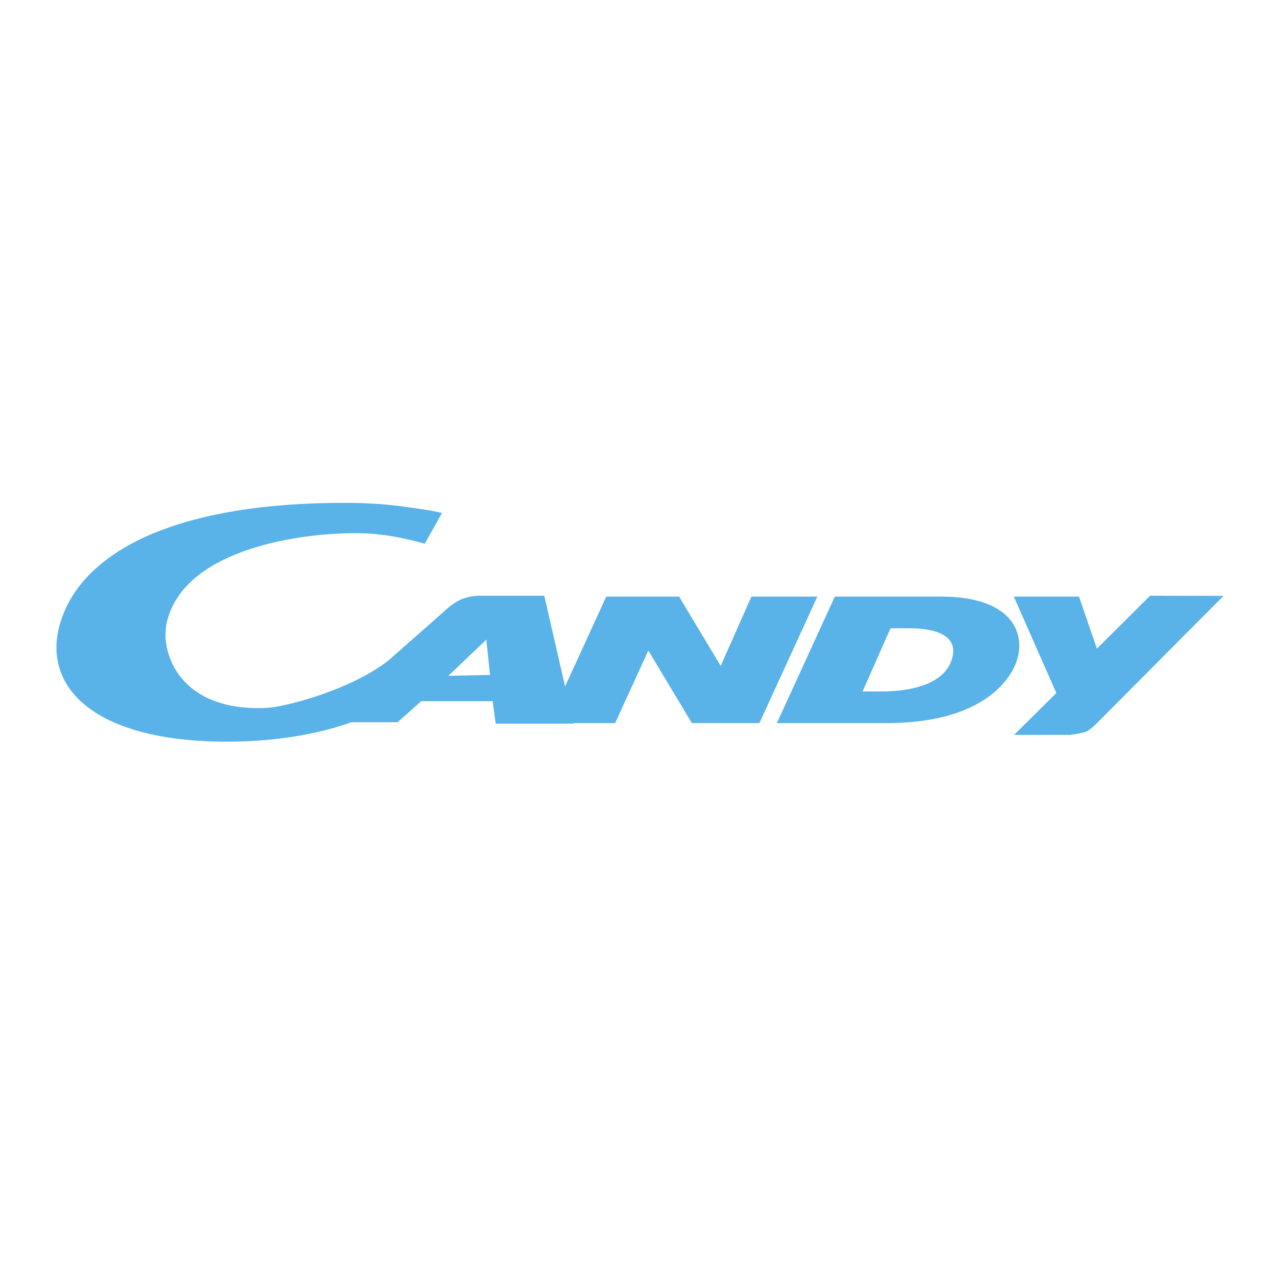 candy-logo-1